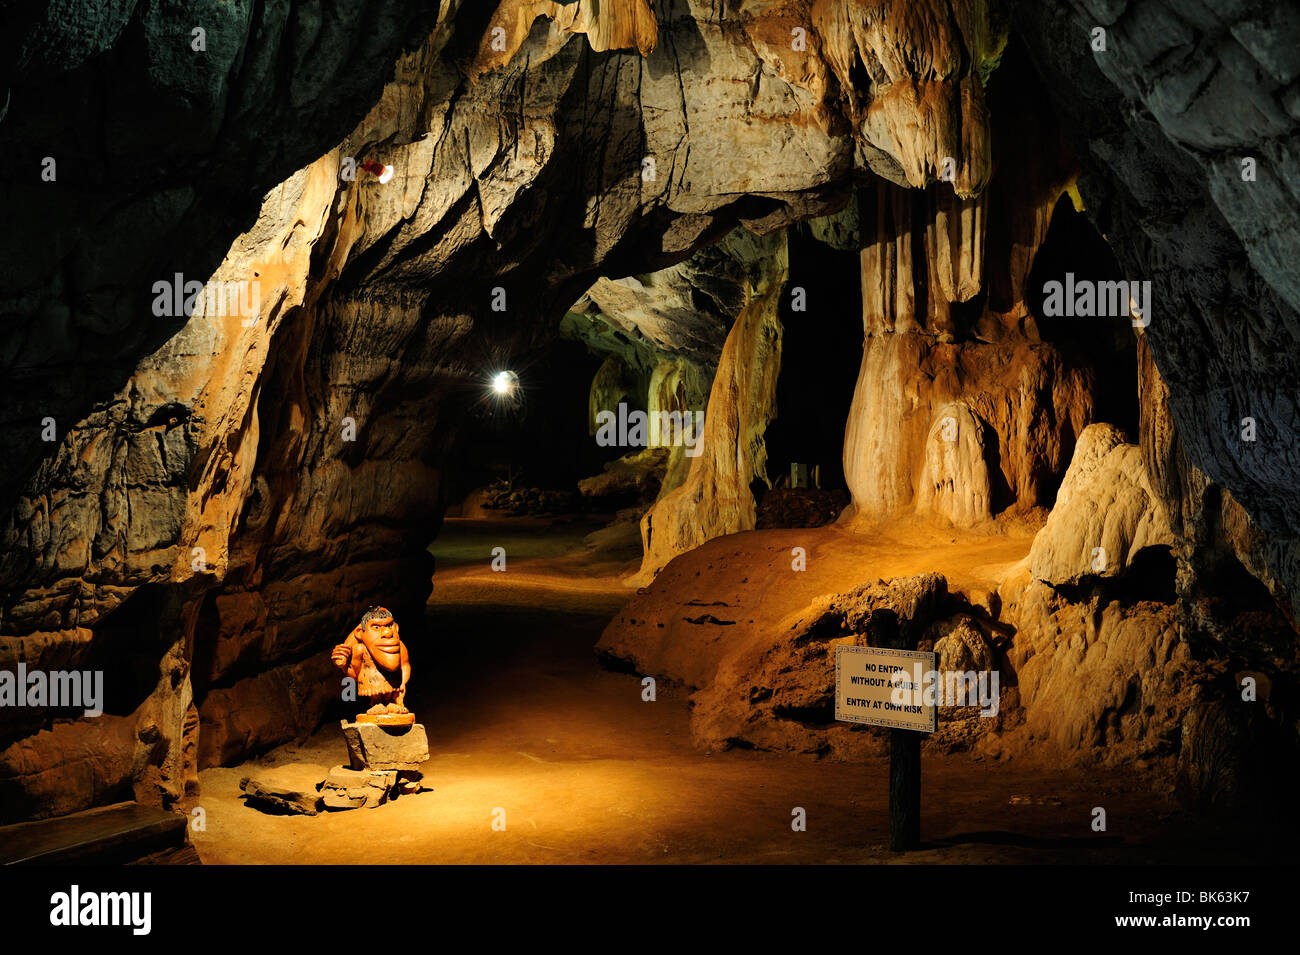 Las Cuevas de Sudwala en la provincia de Mpumalanga, Sudáfrica Foto de stock